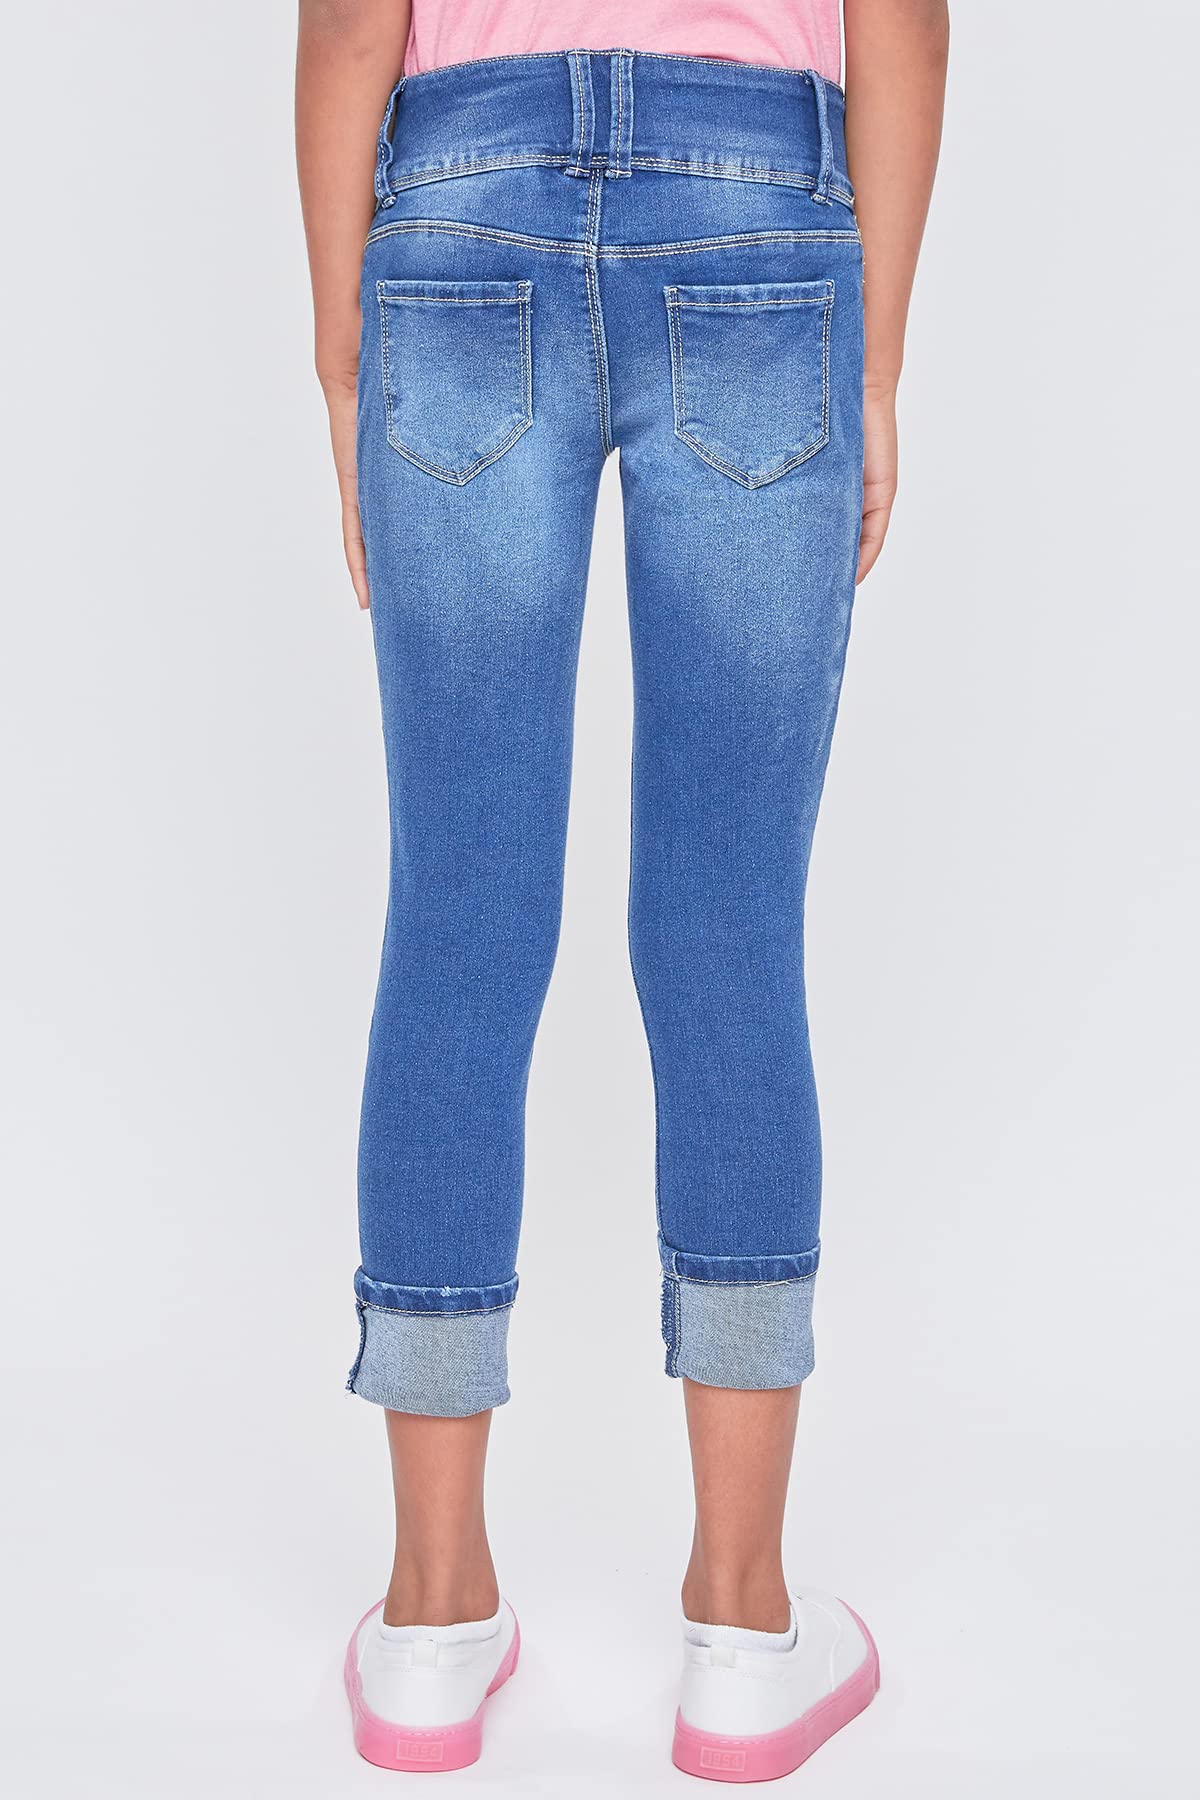 YMI Girls Basic 3 Button Wide Cuff Skinny Jean